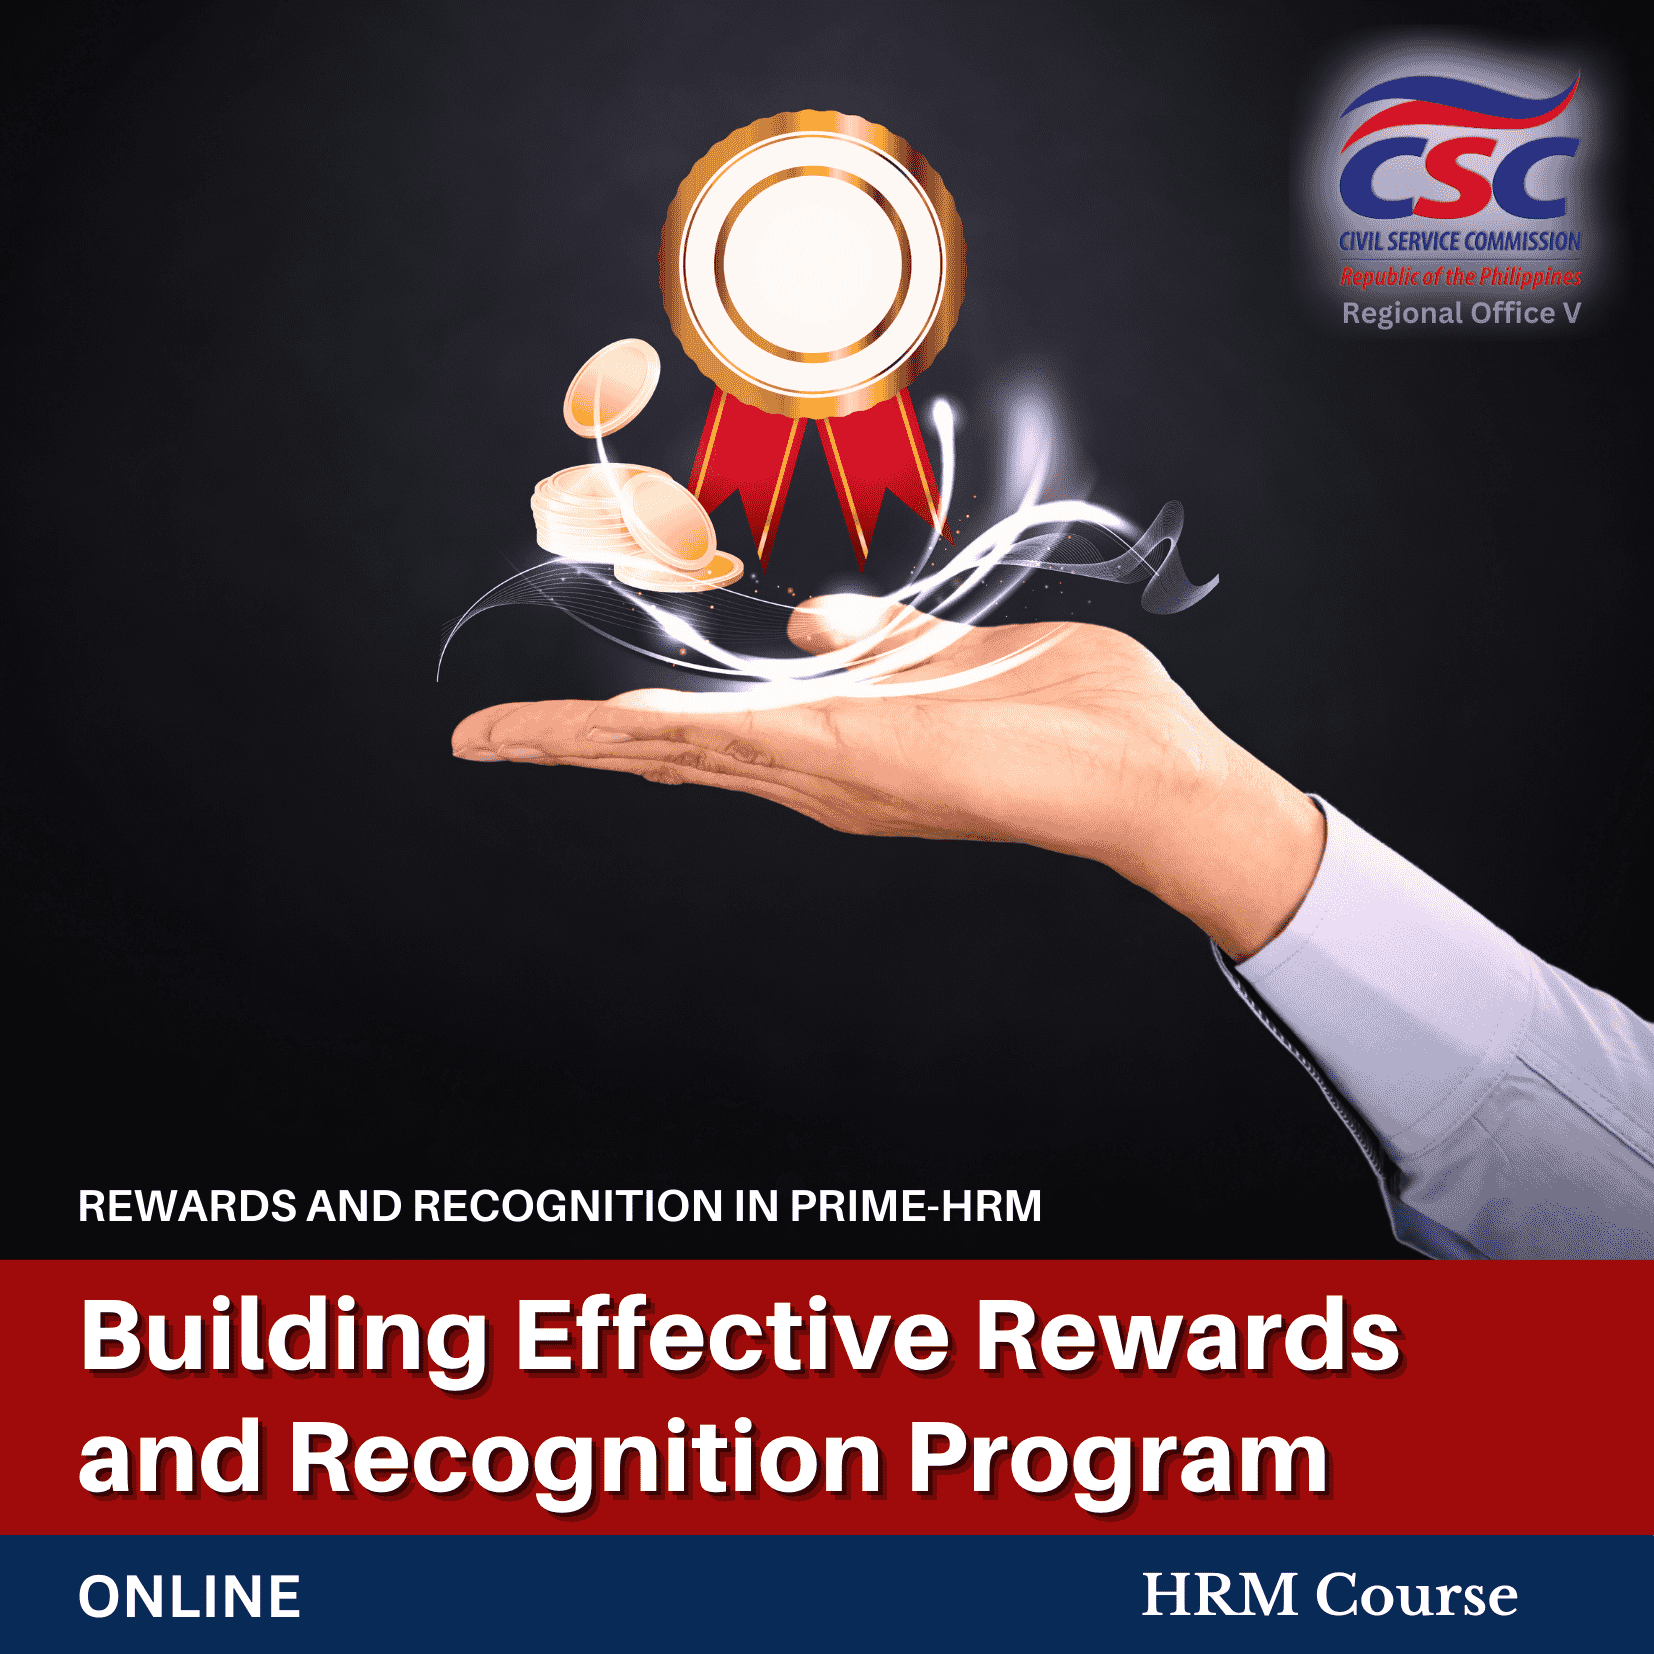 R&R in PRIME-HRM: Building Effective Rewards and Recognition Program